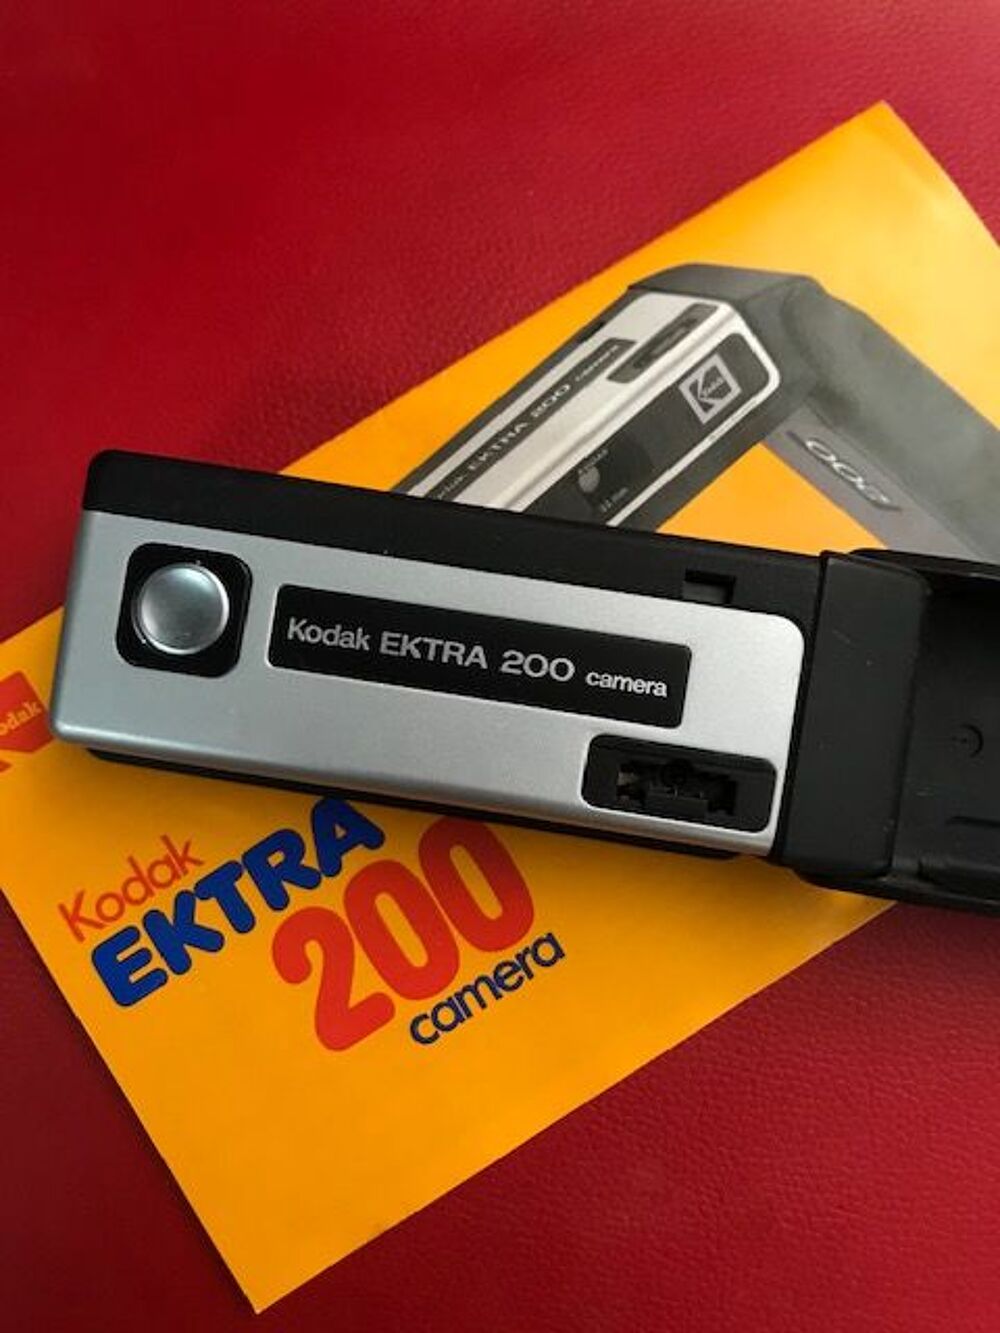 Kodak Ektra 200 Photos/Video/TV